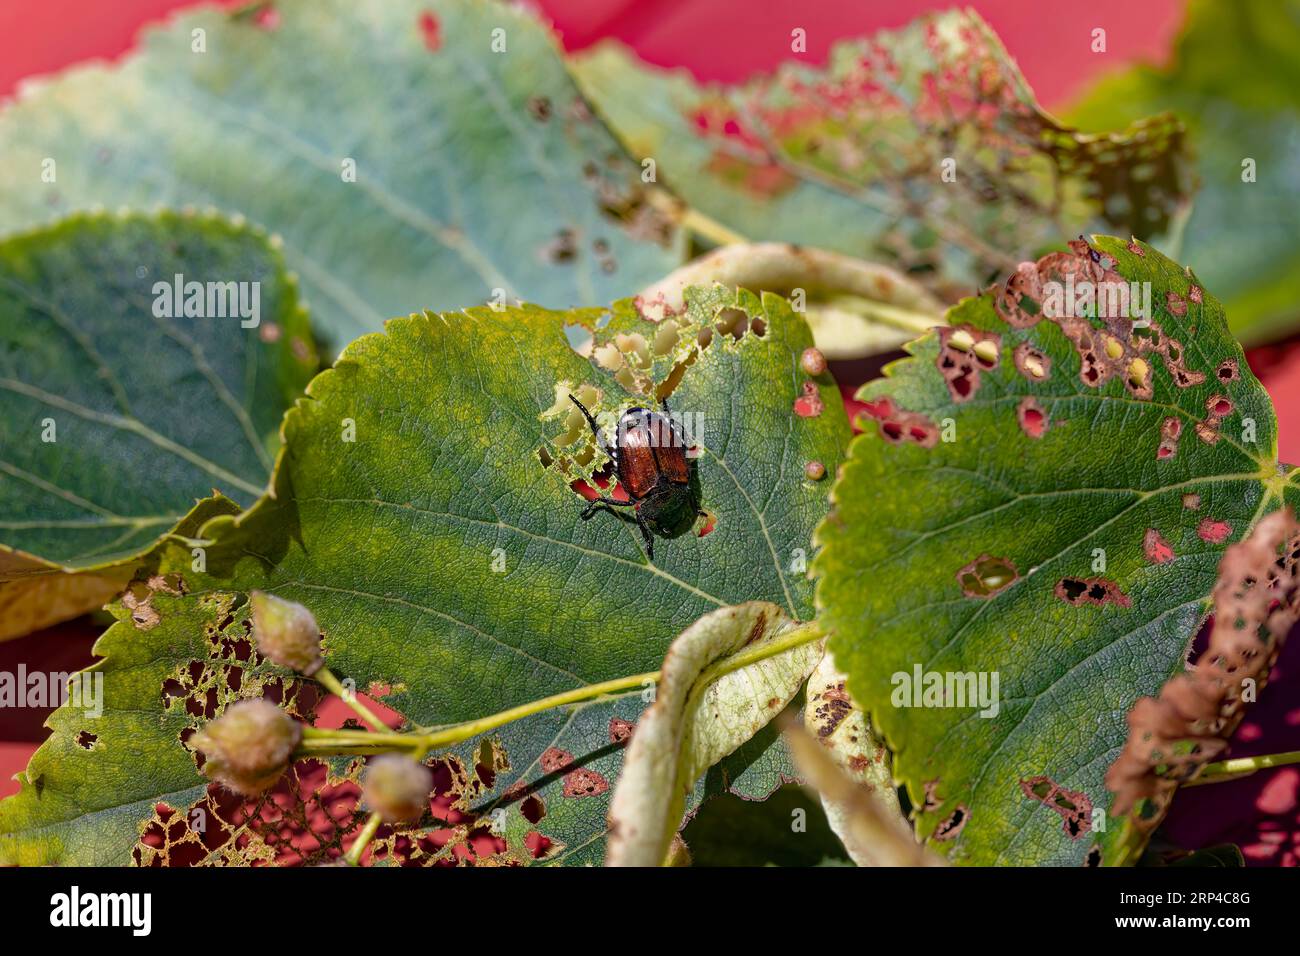 The Japanese beetle (Popillia japonica) is a species of scarab beetle. Invasive beetle. Stock Photo